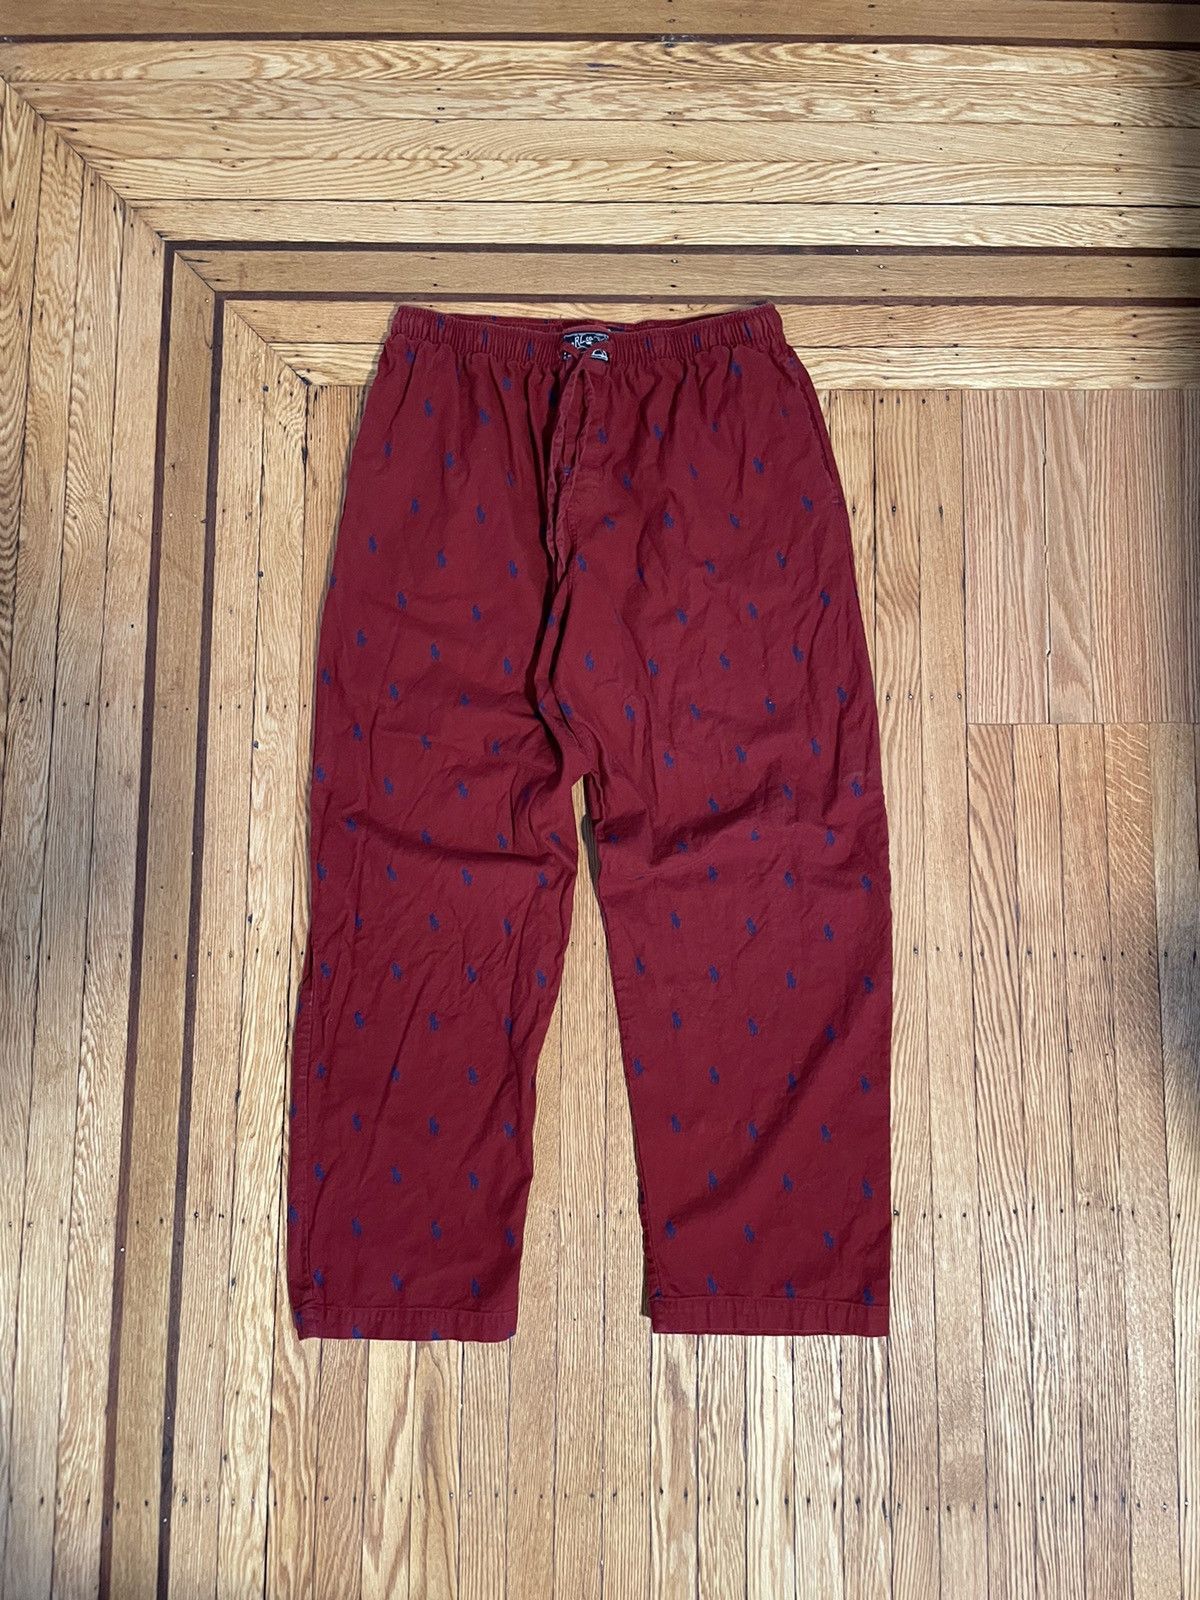 Ralph Lauren Vintage Polo Ralph Lauren Sleepwear Monogram Pants Trousers Size US 31 - 3 Thumbnail